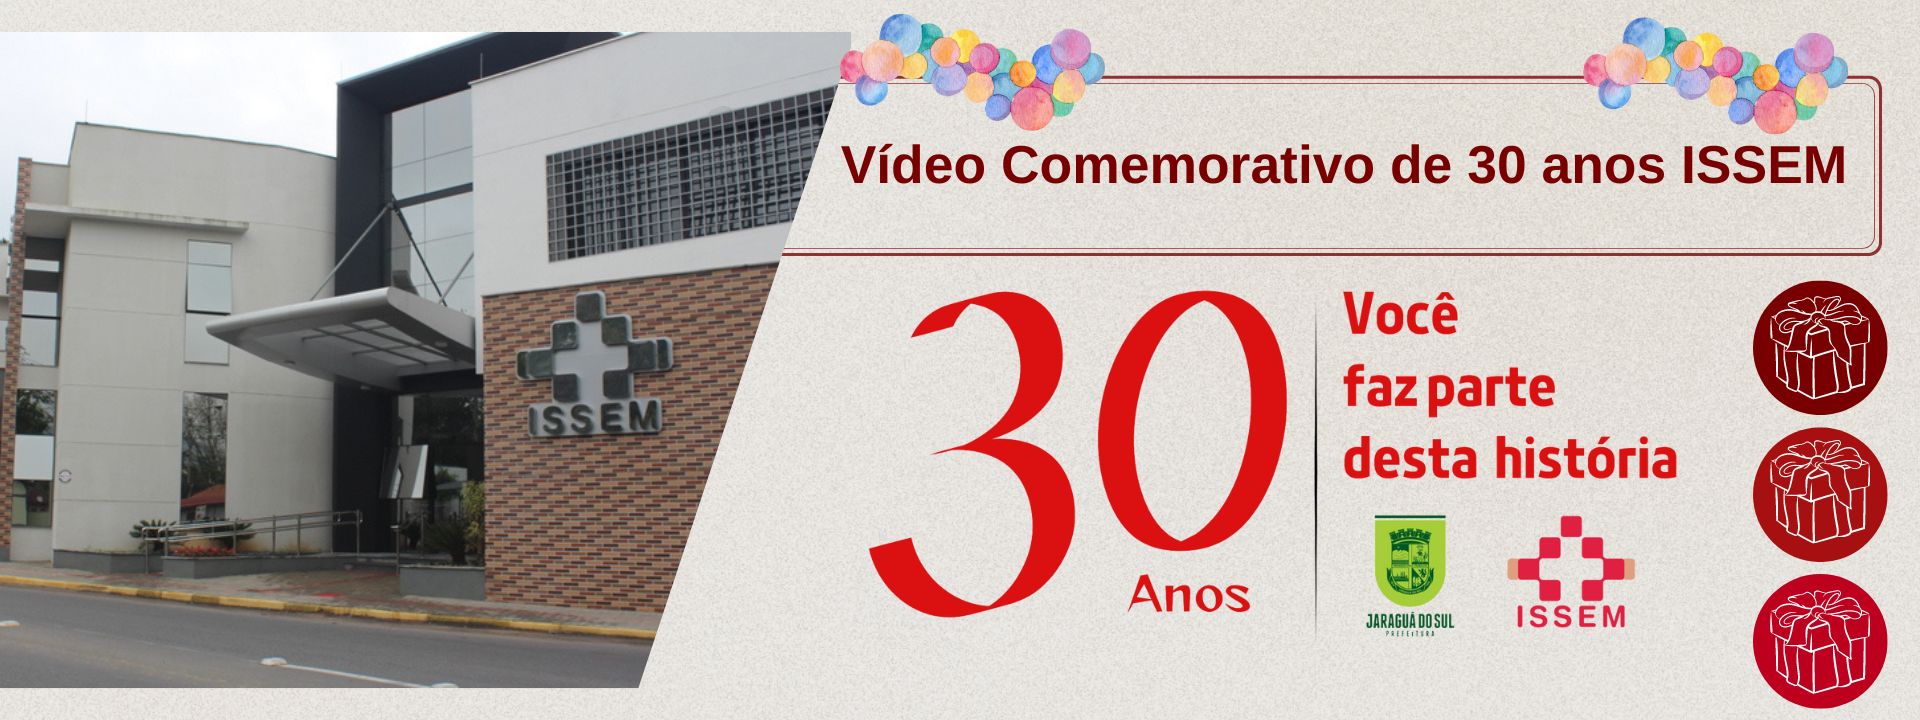 Vídeo Comemorativo 30 anos ISSEM